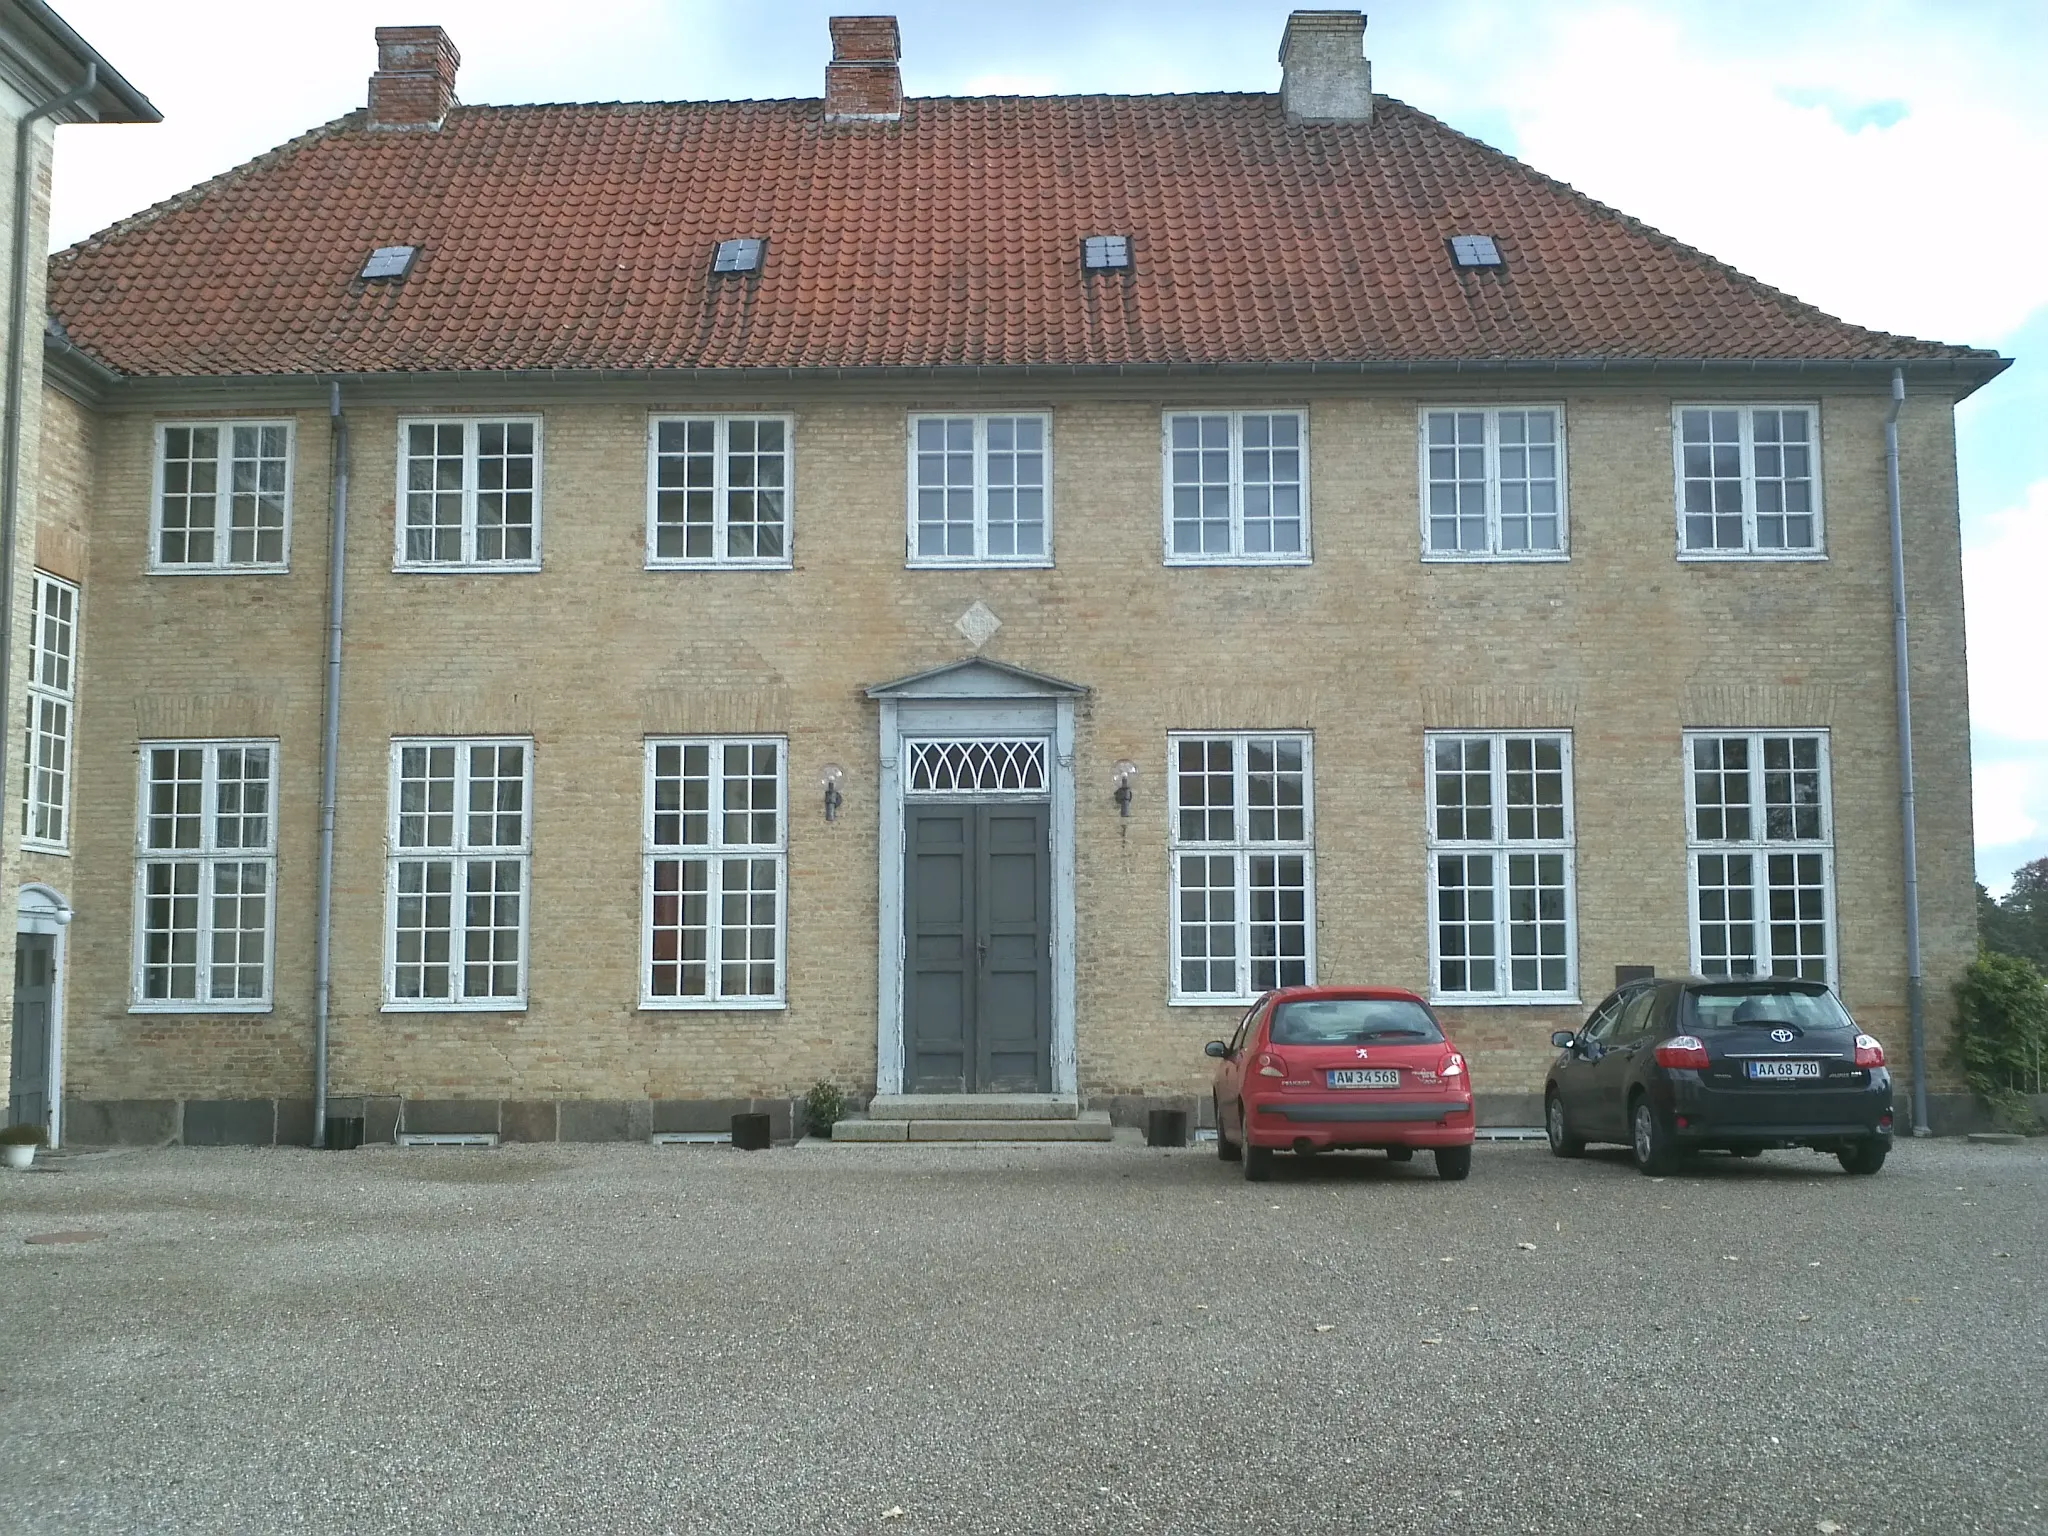 Photo showing: Right wing of Skjoldenæsholm Castle, in Valsølille, Denmark.